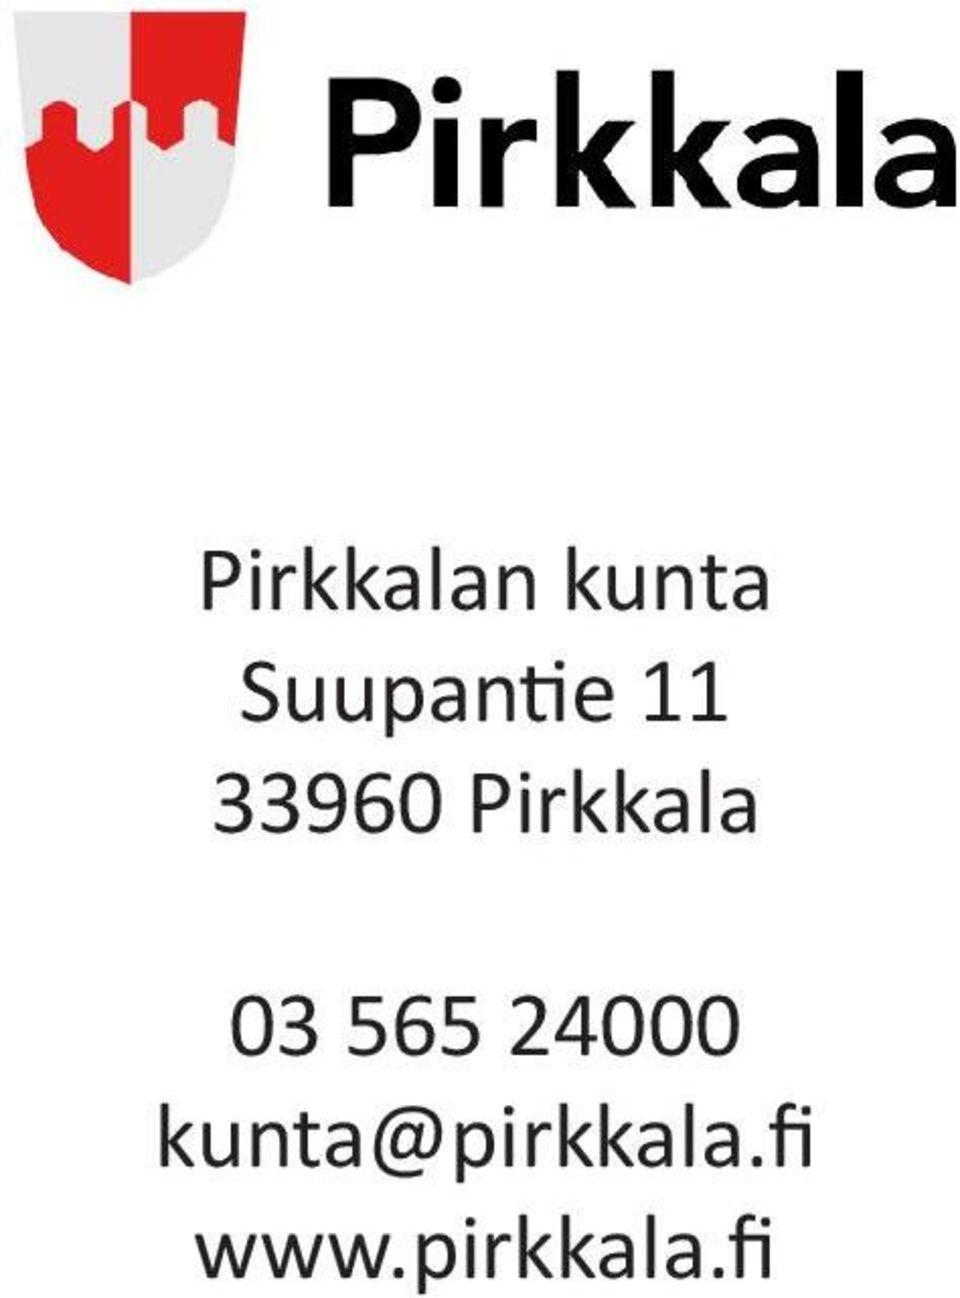 Pirkkala 03 565 24000